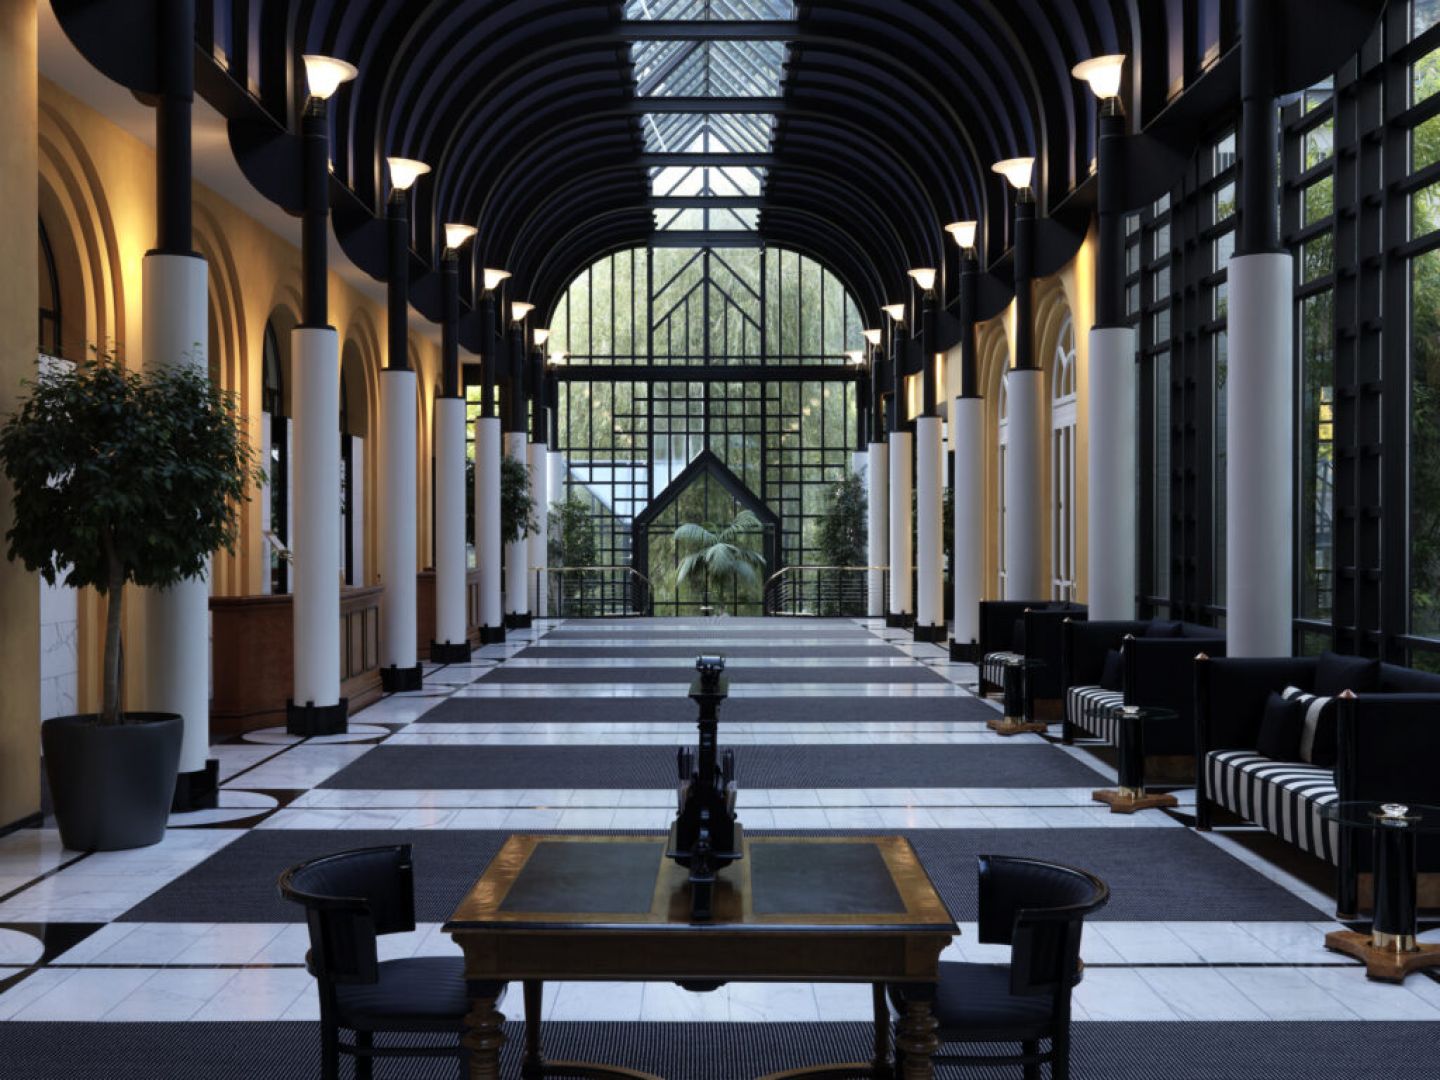 <p>Victoria-Jungfrau Grand Hotel & Spa - Lobby - MICE Service Group</p>
<p> </p>